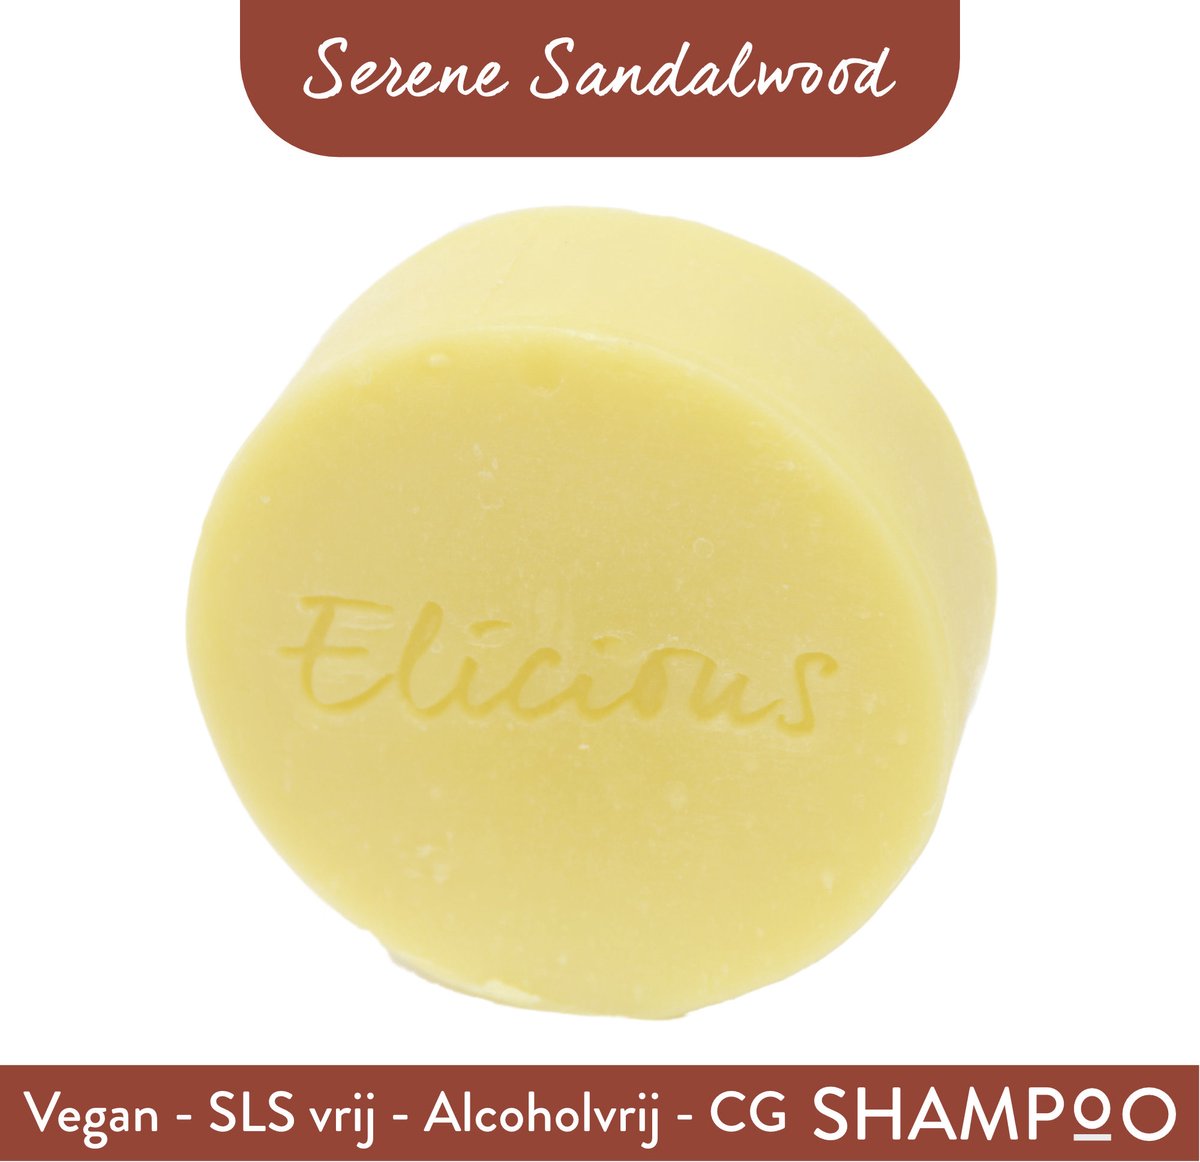 Elicious® - Shampoo Bar - Sandelhout - CG Vriendelijk - Curly Girl - Natuurlijke Shampoo - SLS vrij - Plasticvrij - Vegan - Halal - Dierproefvrij